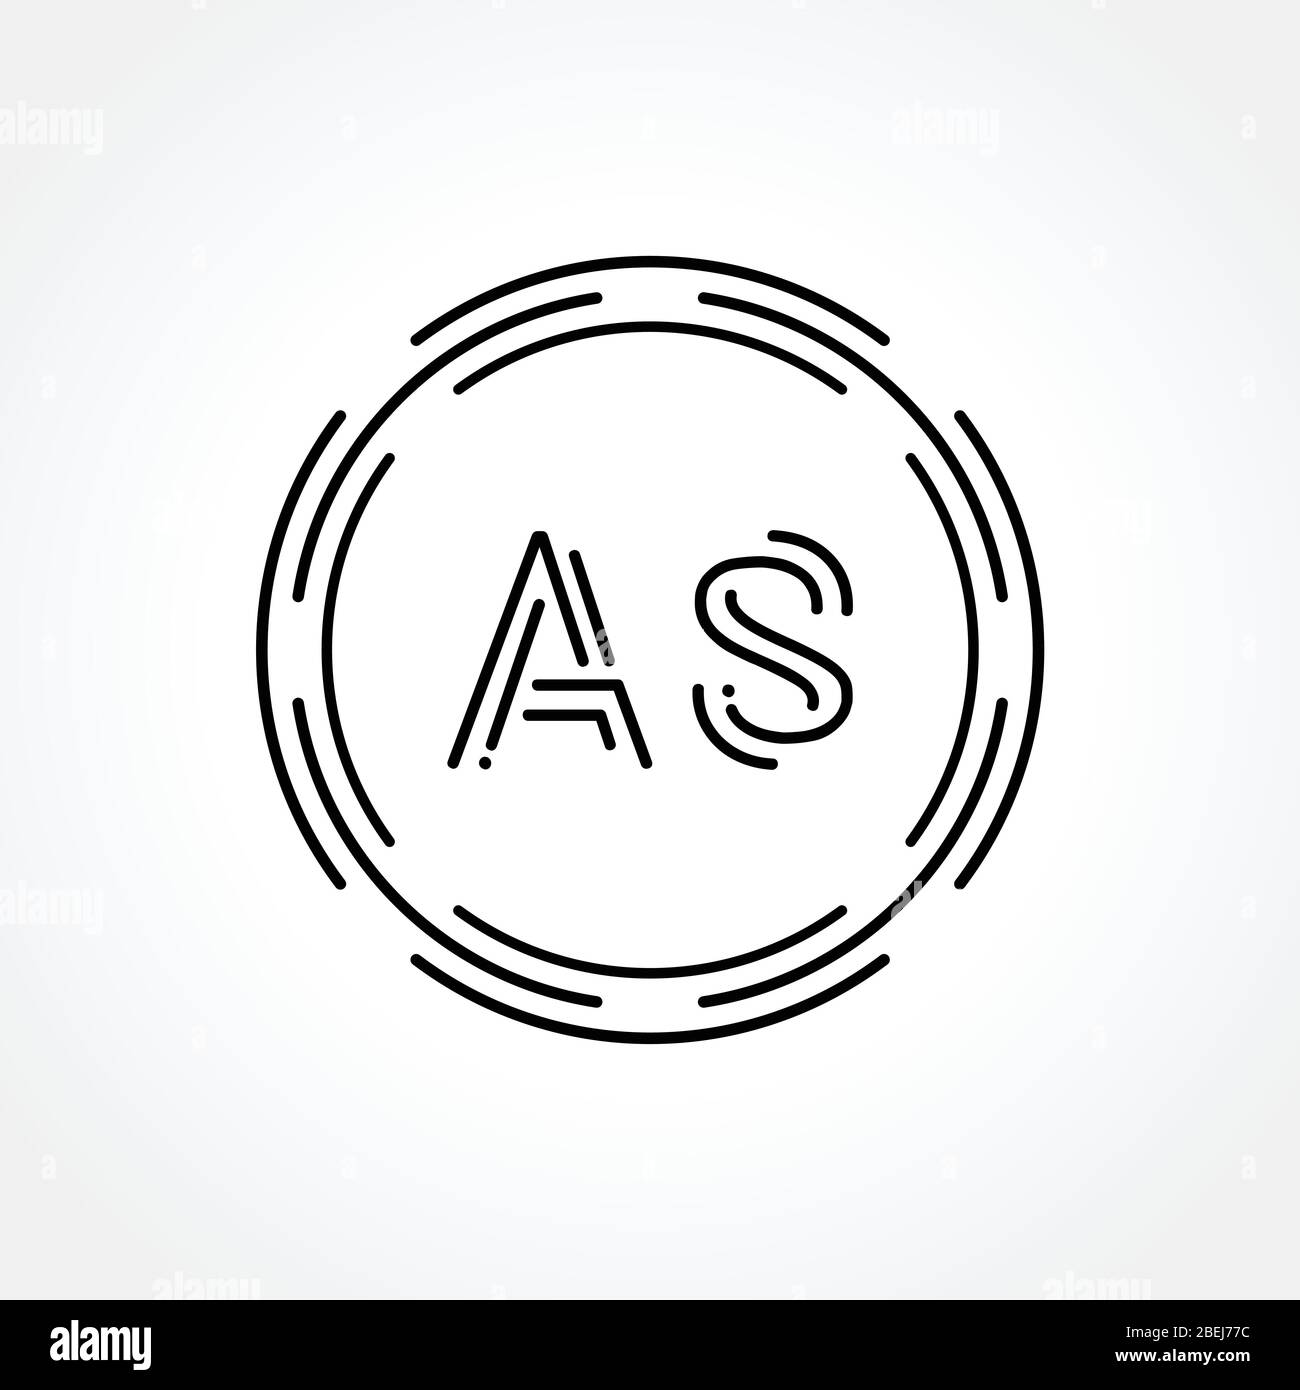 Initial AS Logo Creative Typography Vektor Vorlage. Digitaler abstrakter Brief ALS Logo-Design Stock Vektor